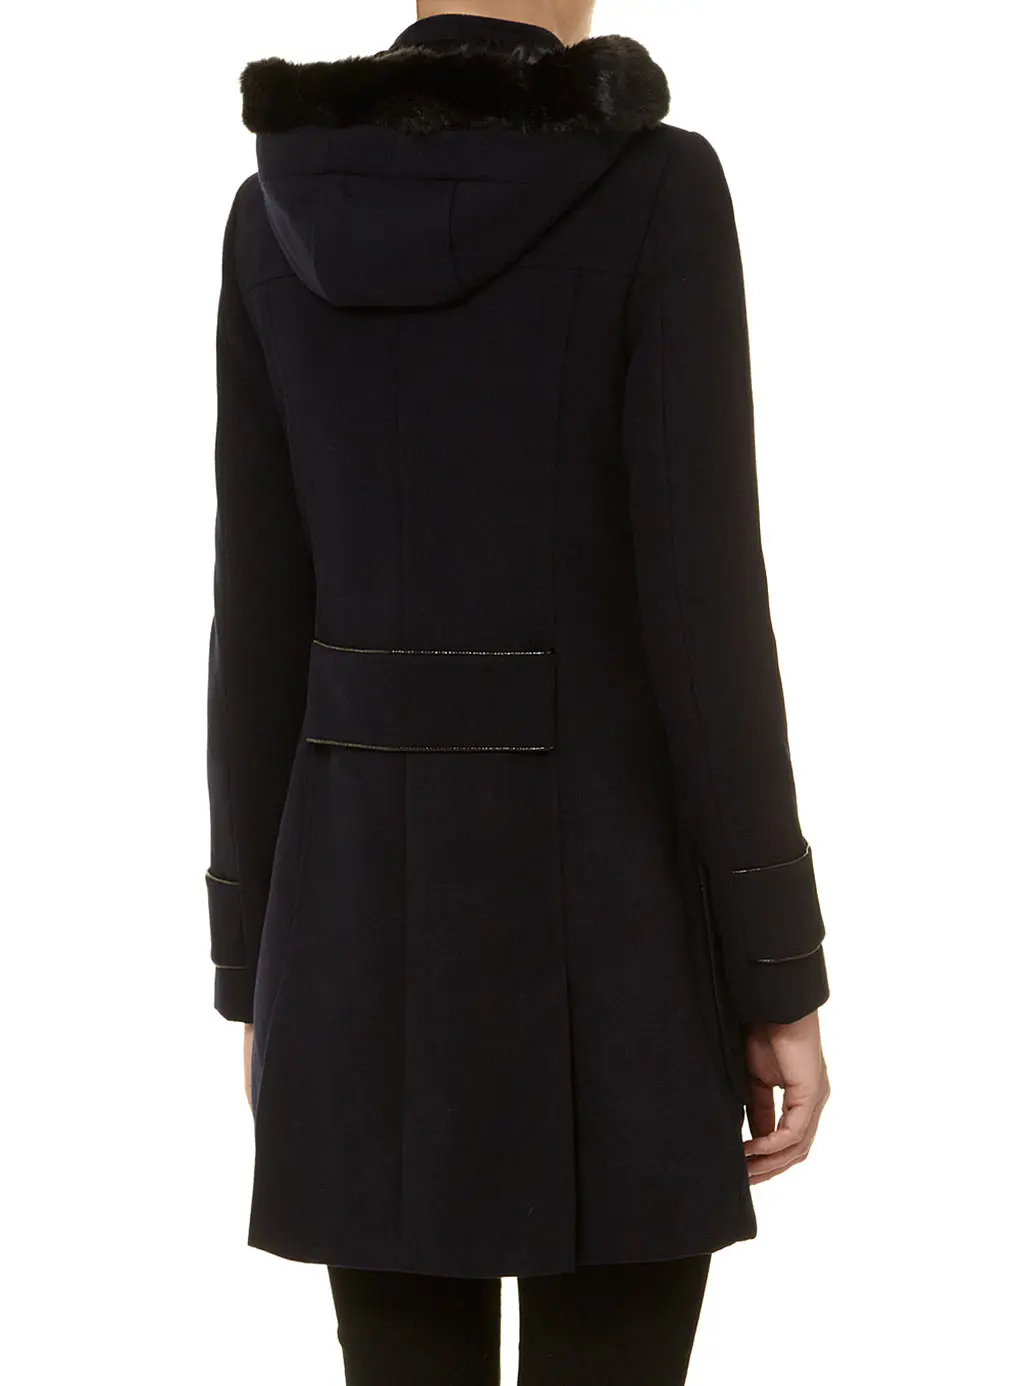 Long Fashionable Turkish Women Coats With Hood China Manufacture - Buy ...